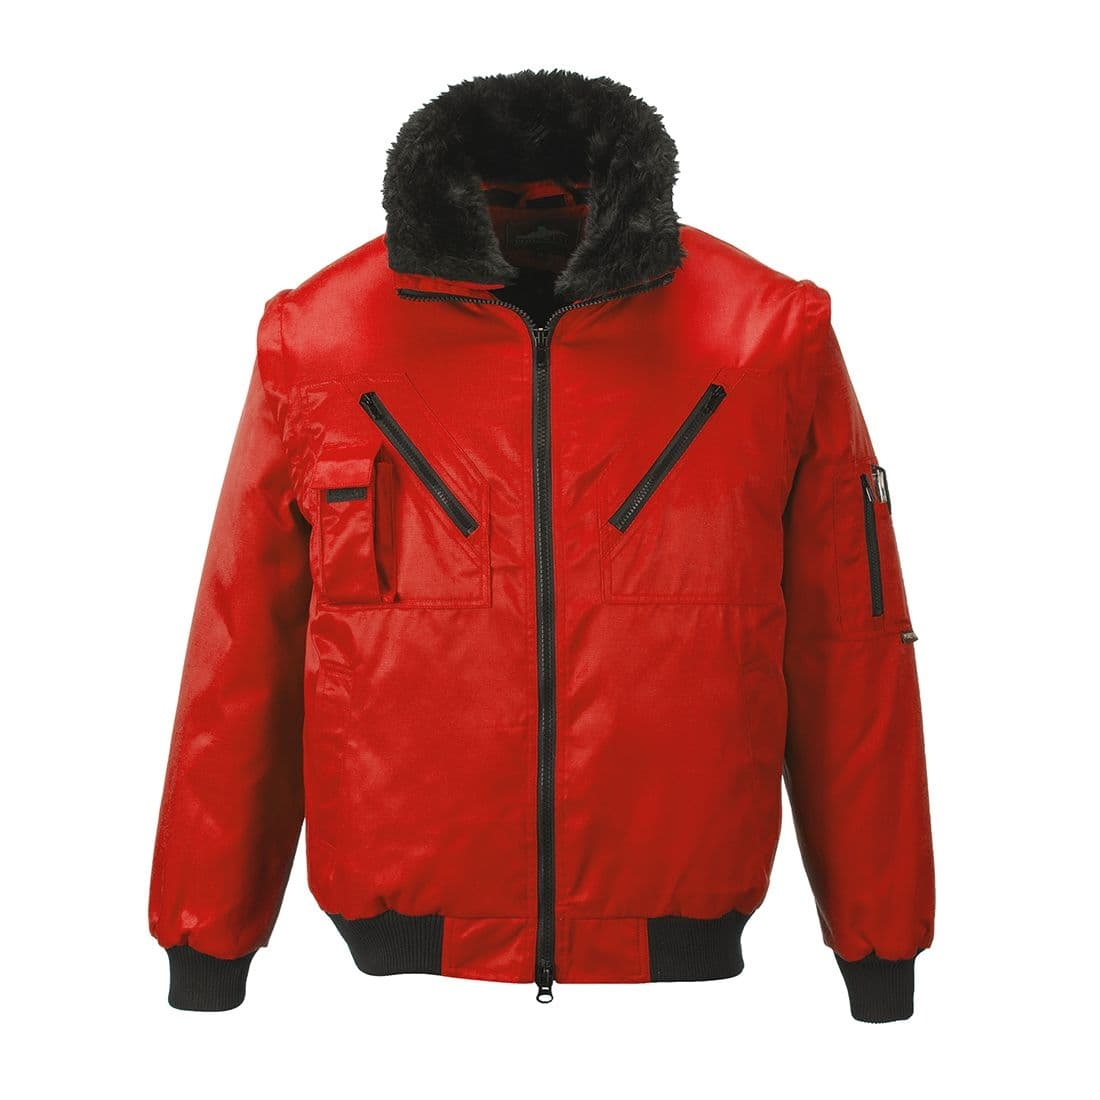 Portwest Pilot Jacket – Red – XXXL – PPE – Taft Safety Store